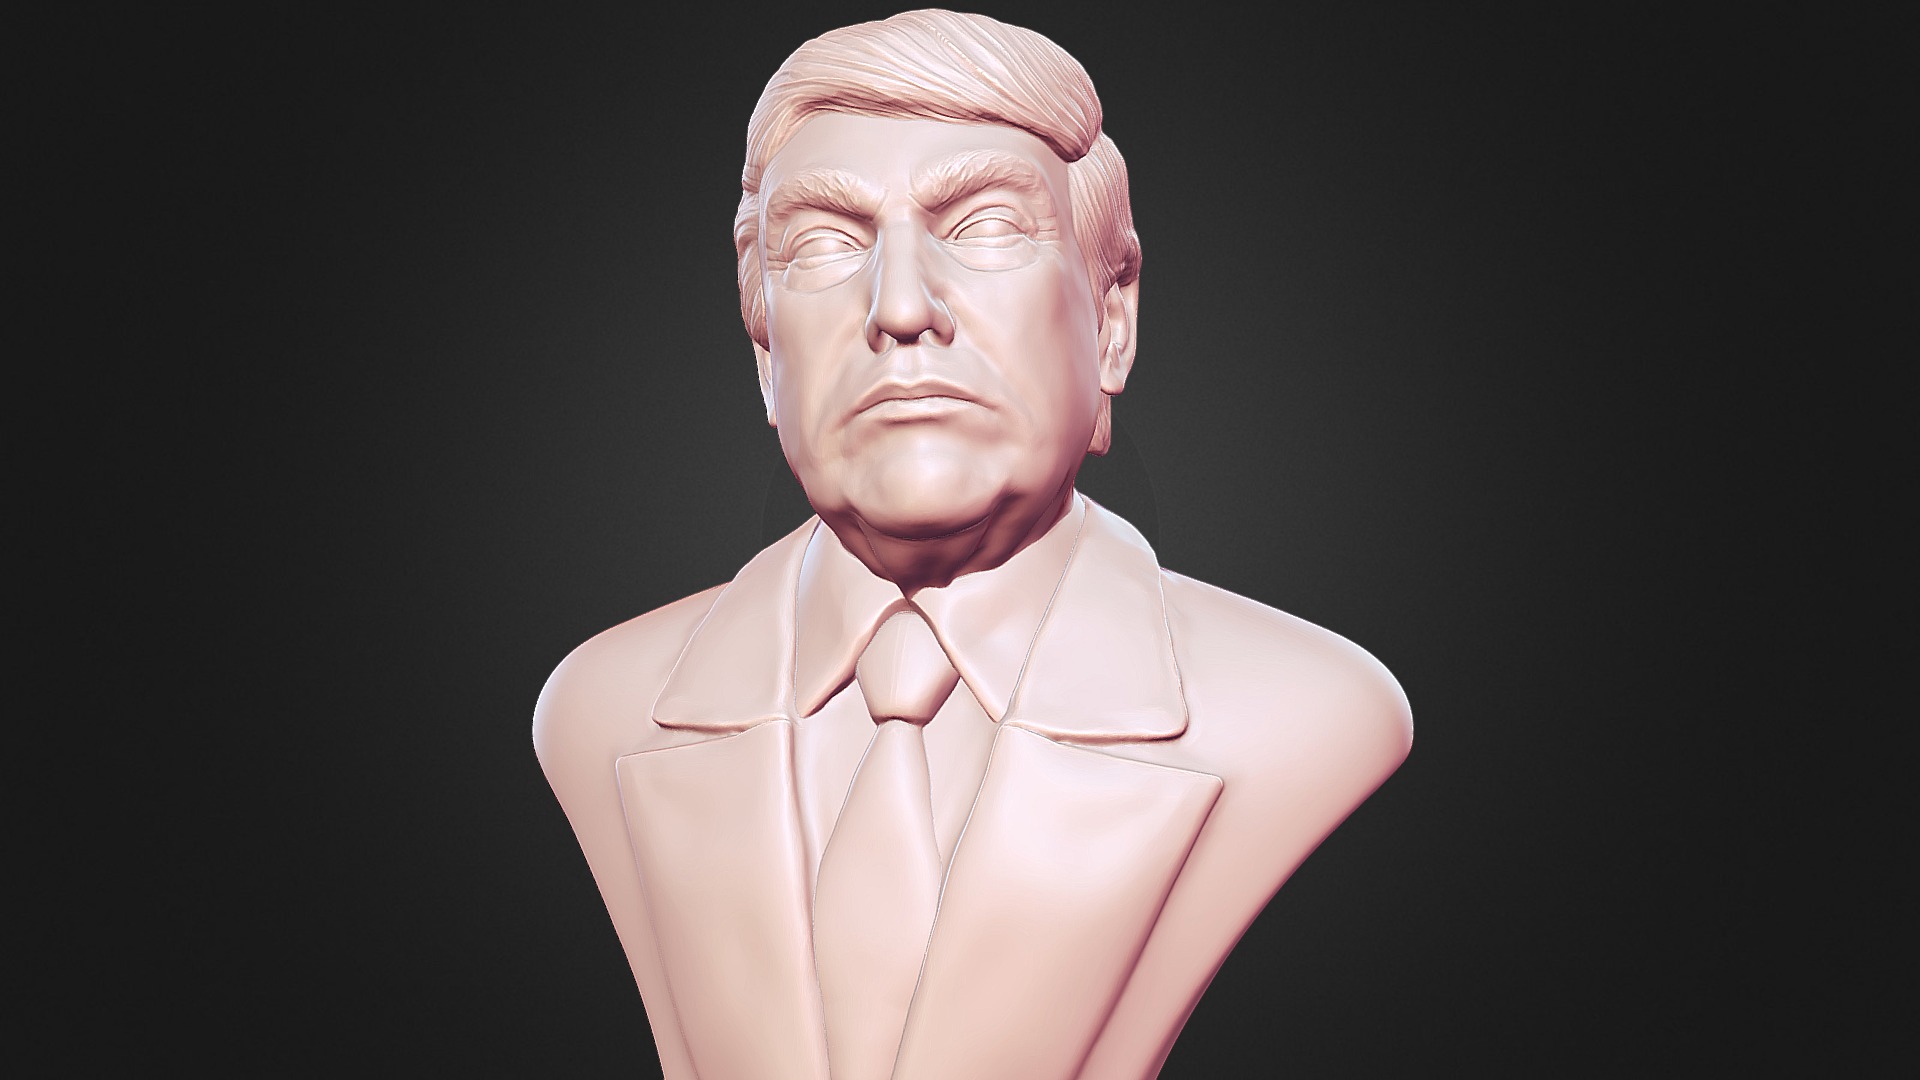 3D model Donald Trump presidental edition 3D printable - This is a 3D model of the Donald Trump presidental edition 3D printable. The 3D model is about a person wearing a pink shirt.